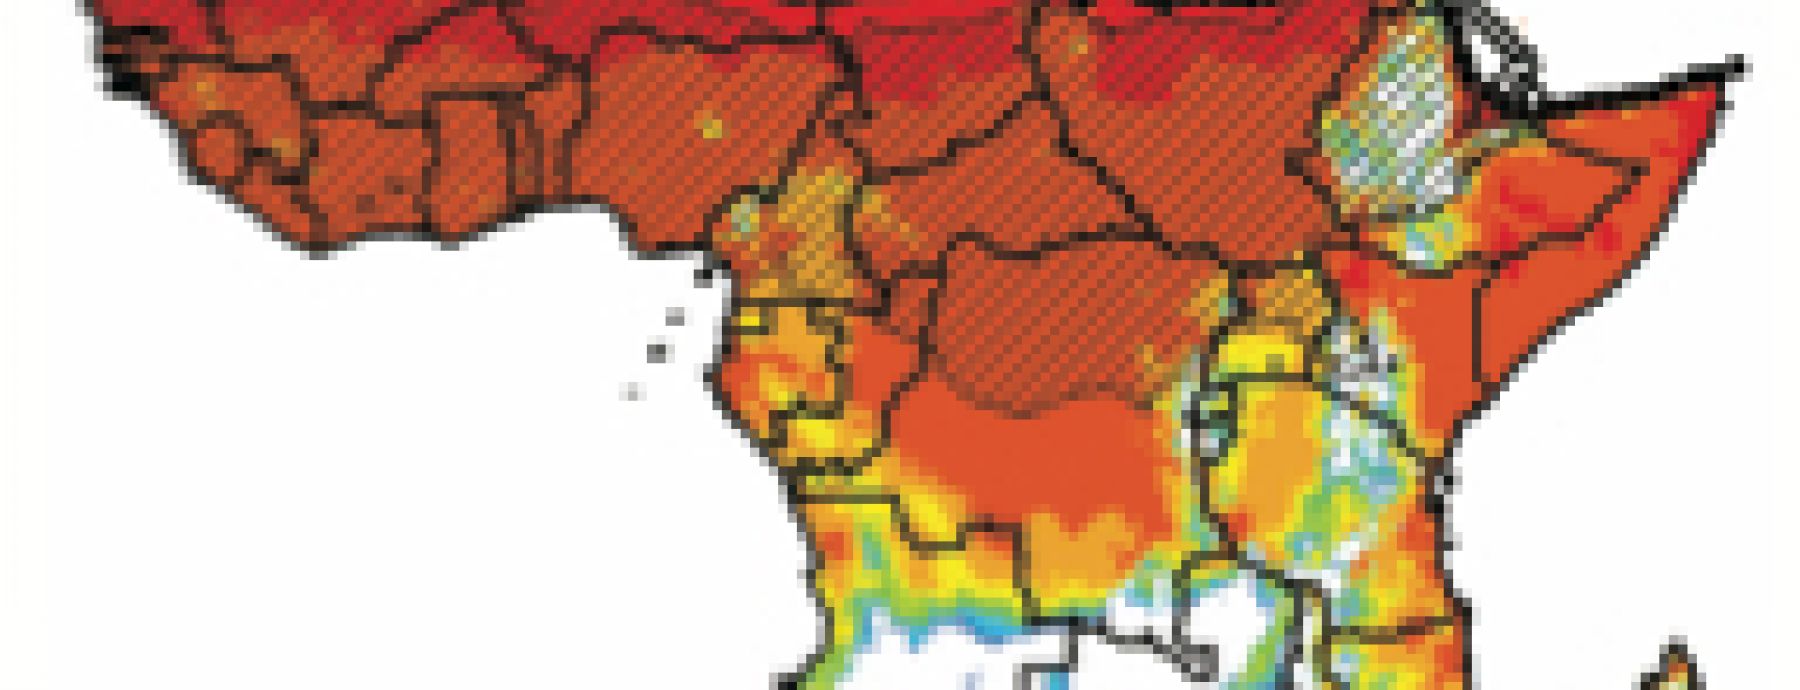 Implications of temperature variation for malaria parasite development across Africa